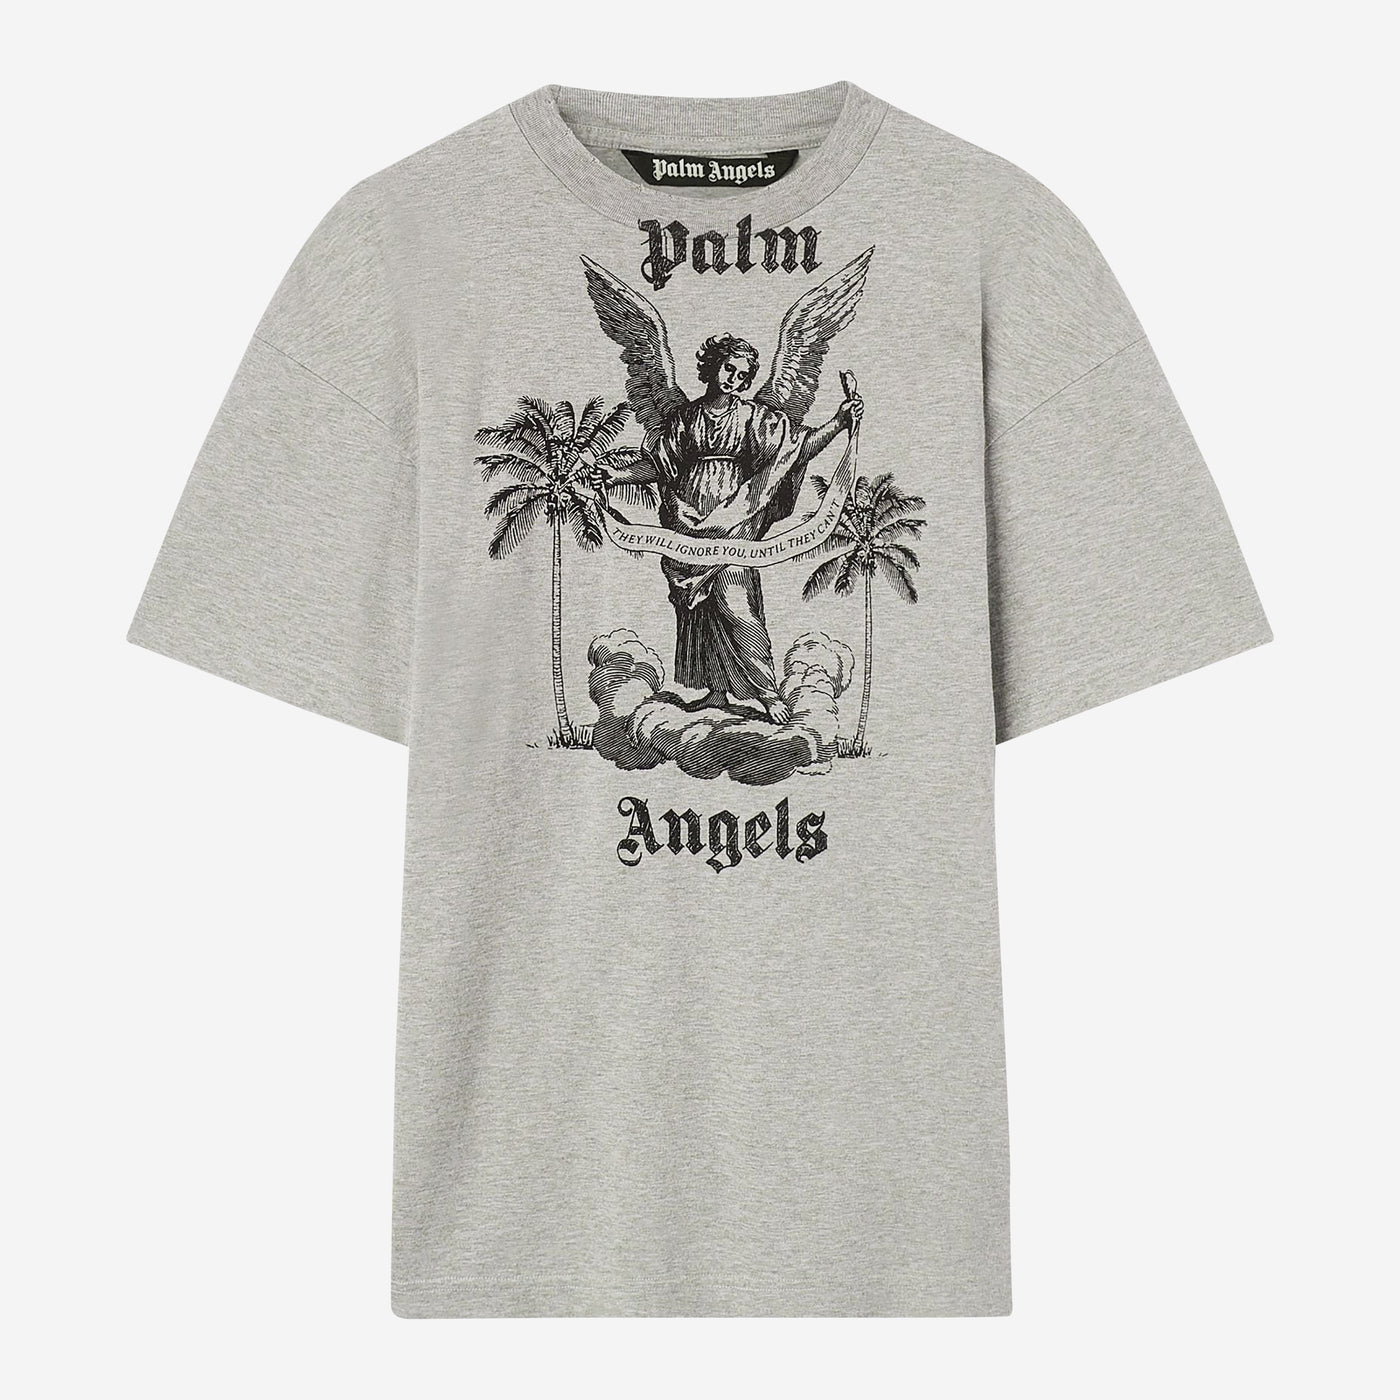 Palm Angels University T-Shirt